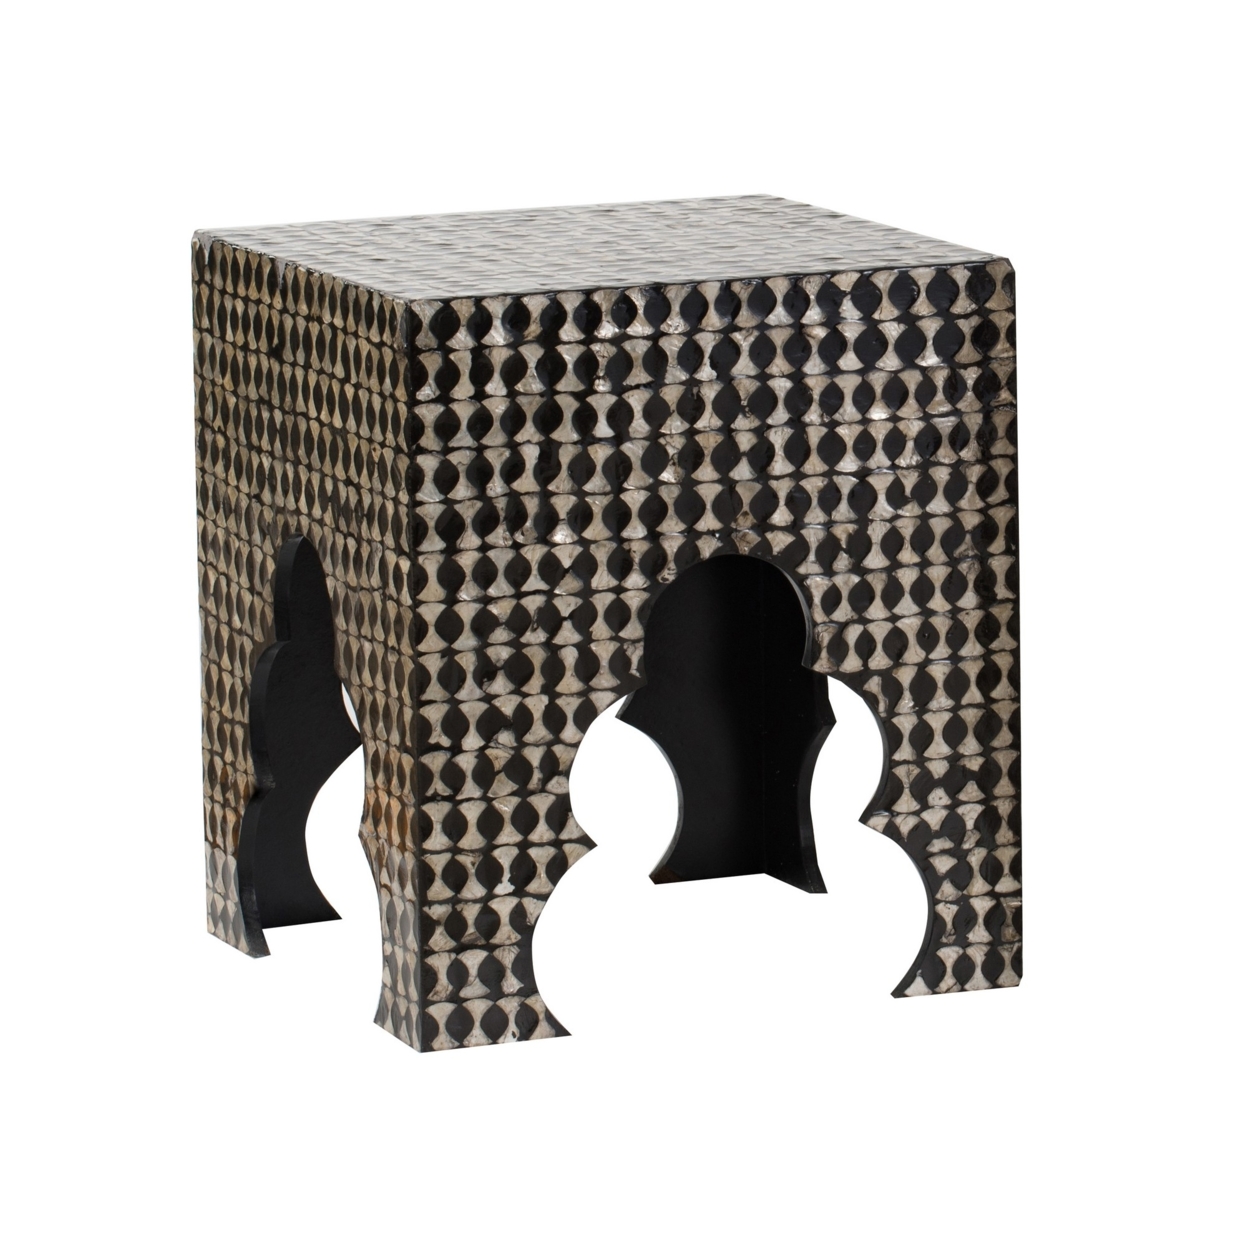 Lez 18, 20 Inch Capiz Accent Table Stool Set Of 2, Black, Pearl Mosaic Look- Saltoro Sherpi